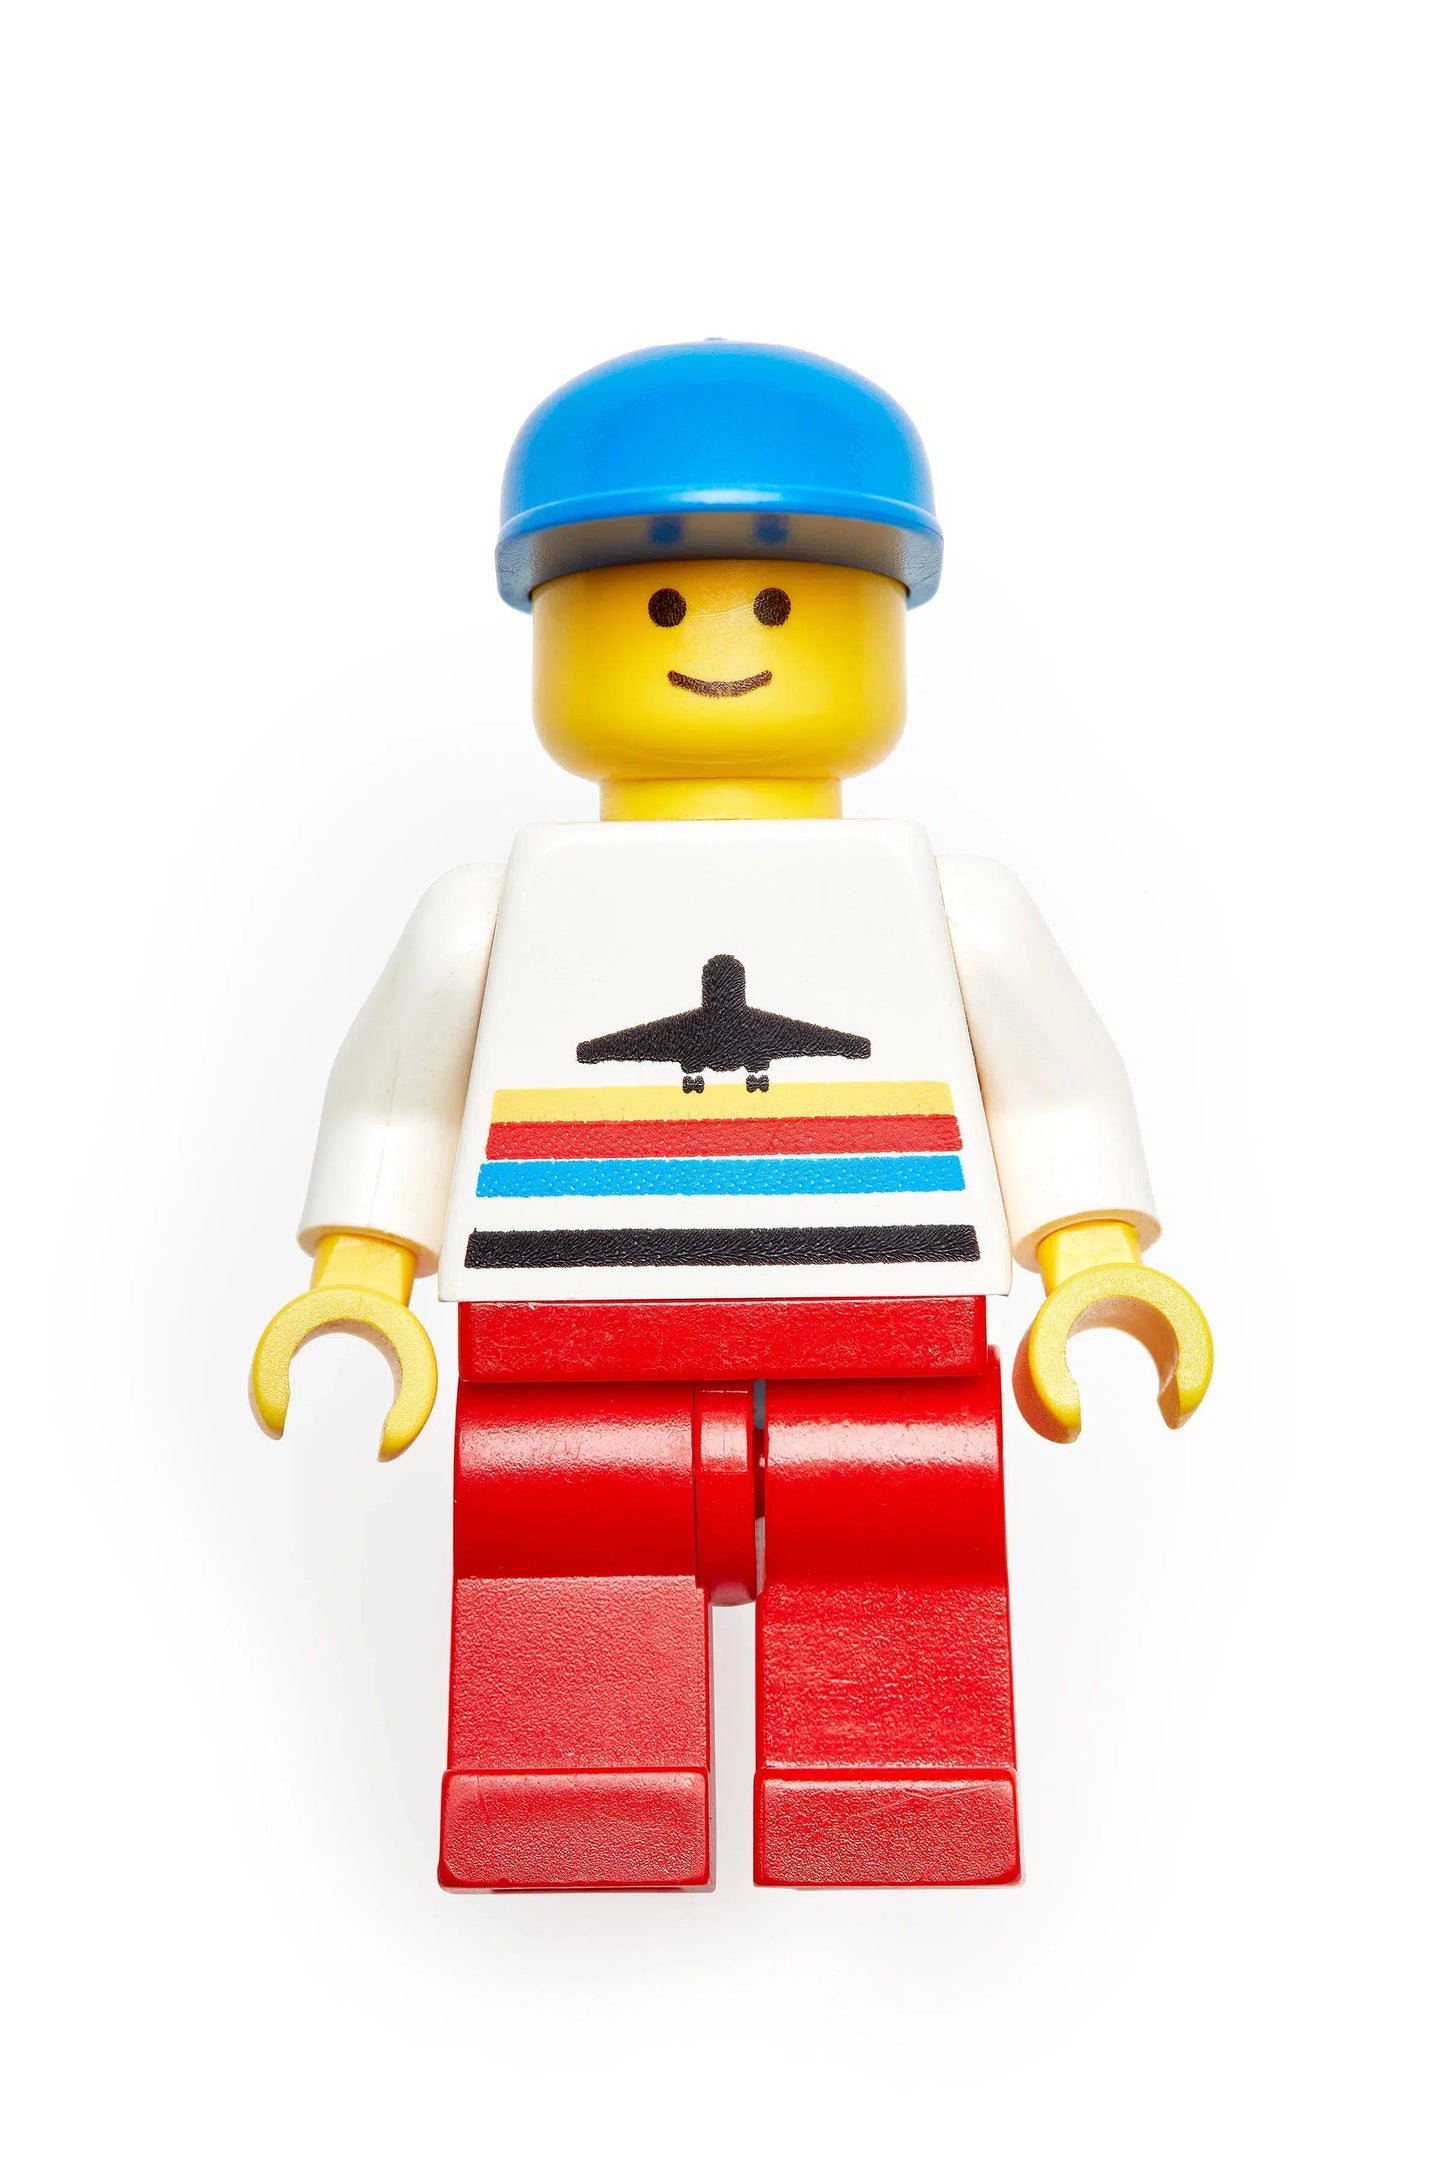 Lego 20, by Peter Andrew-PurePhoto